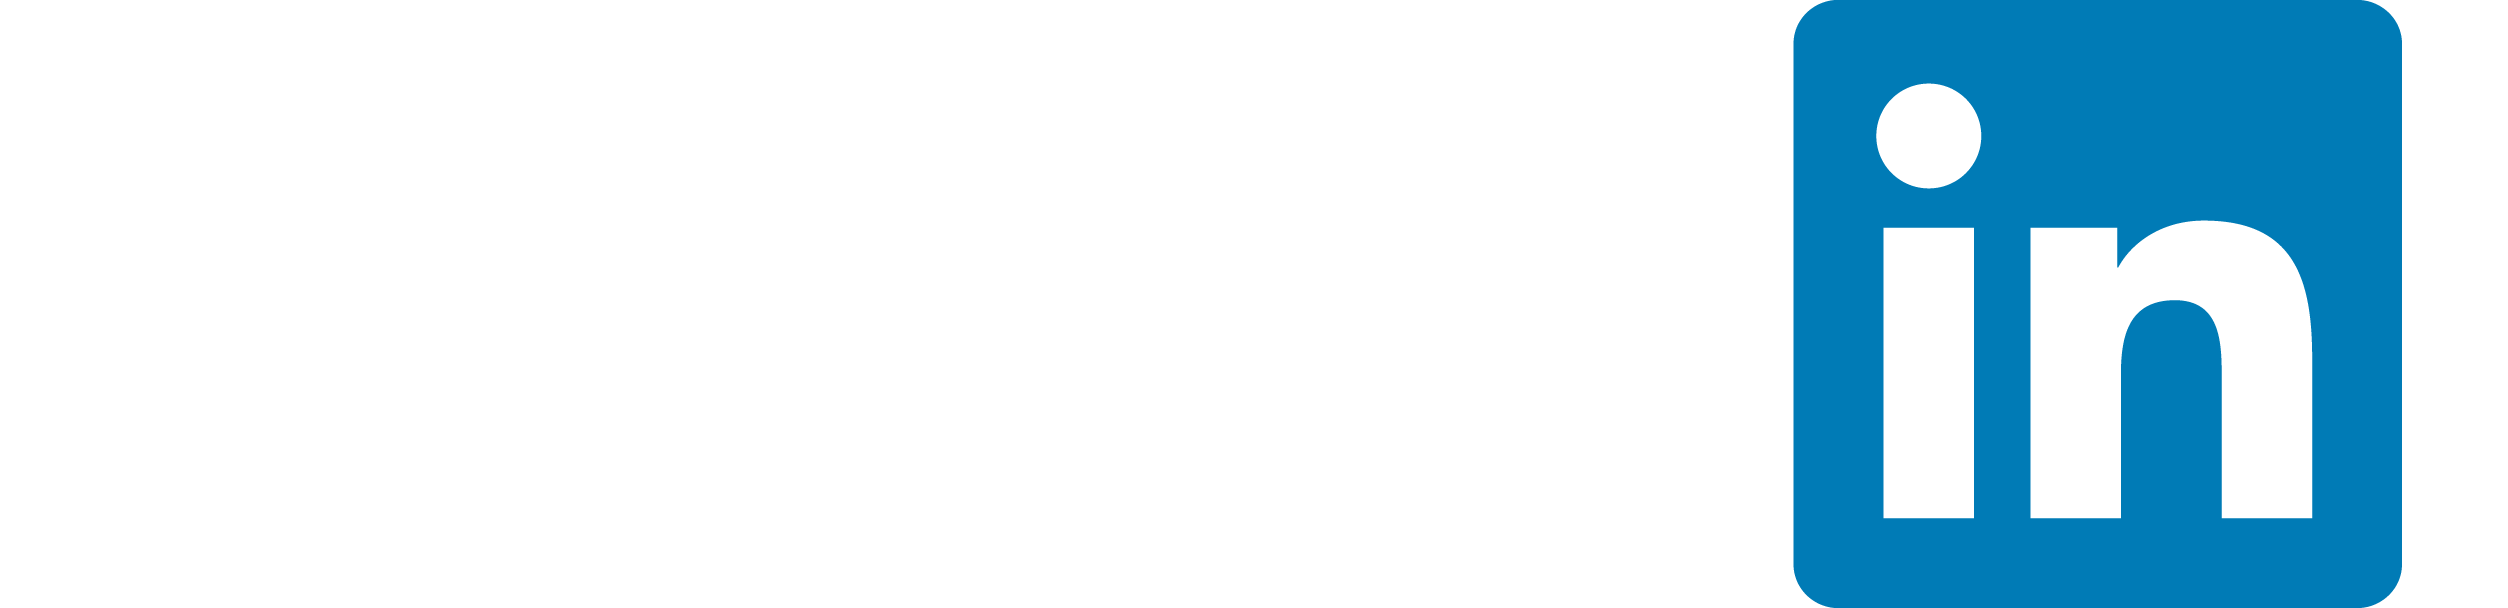 linkedin transparent logo